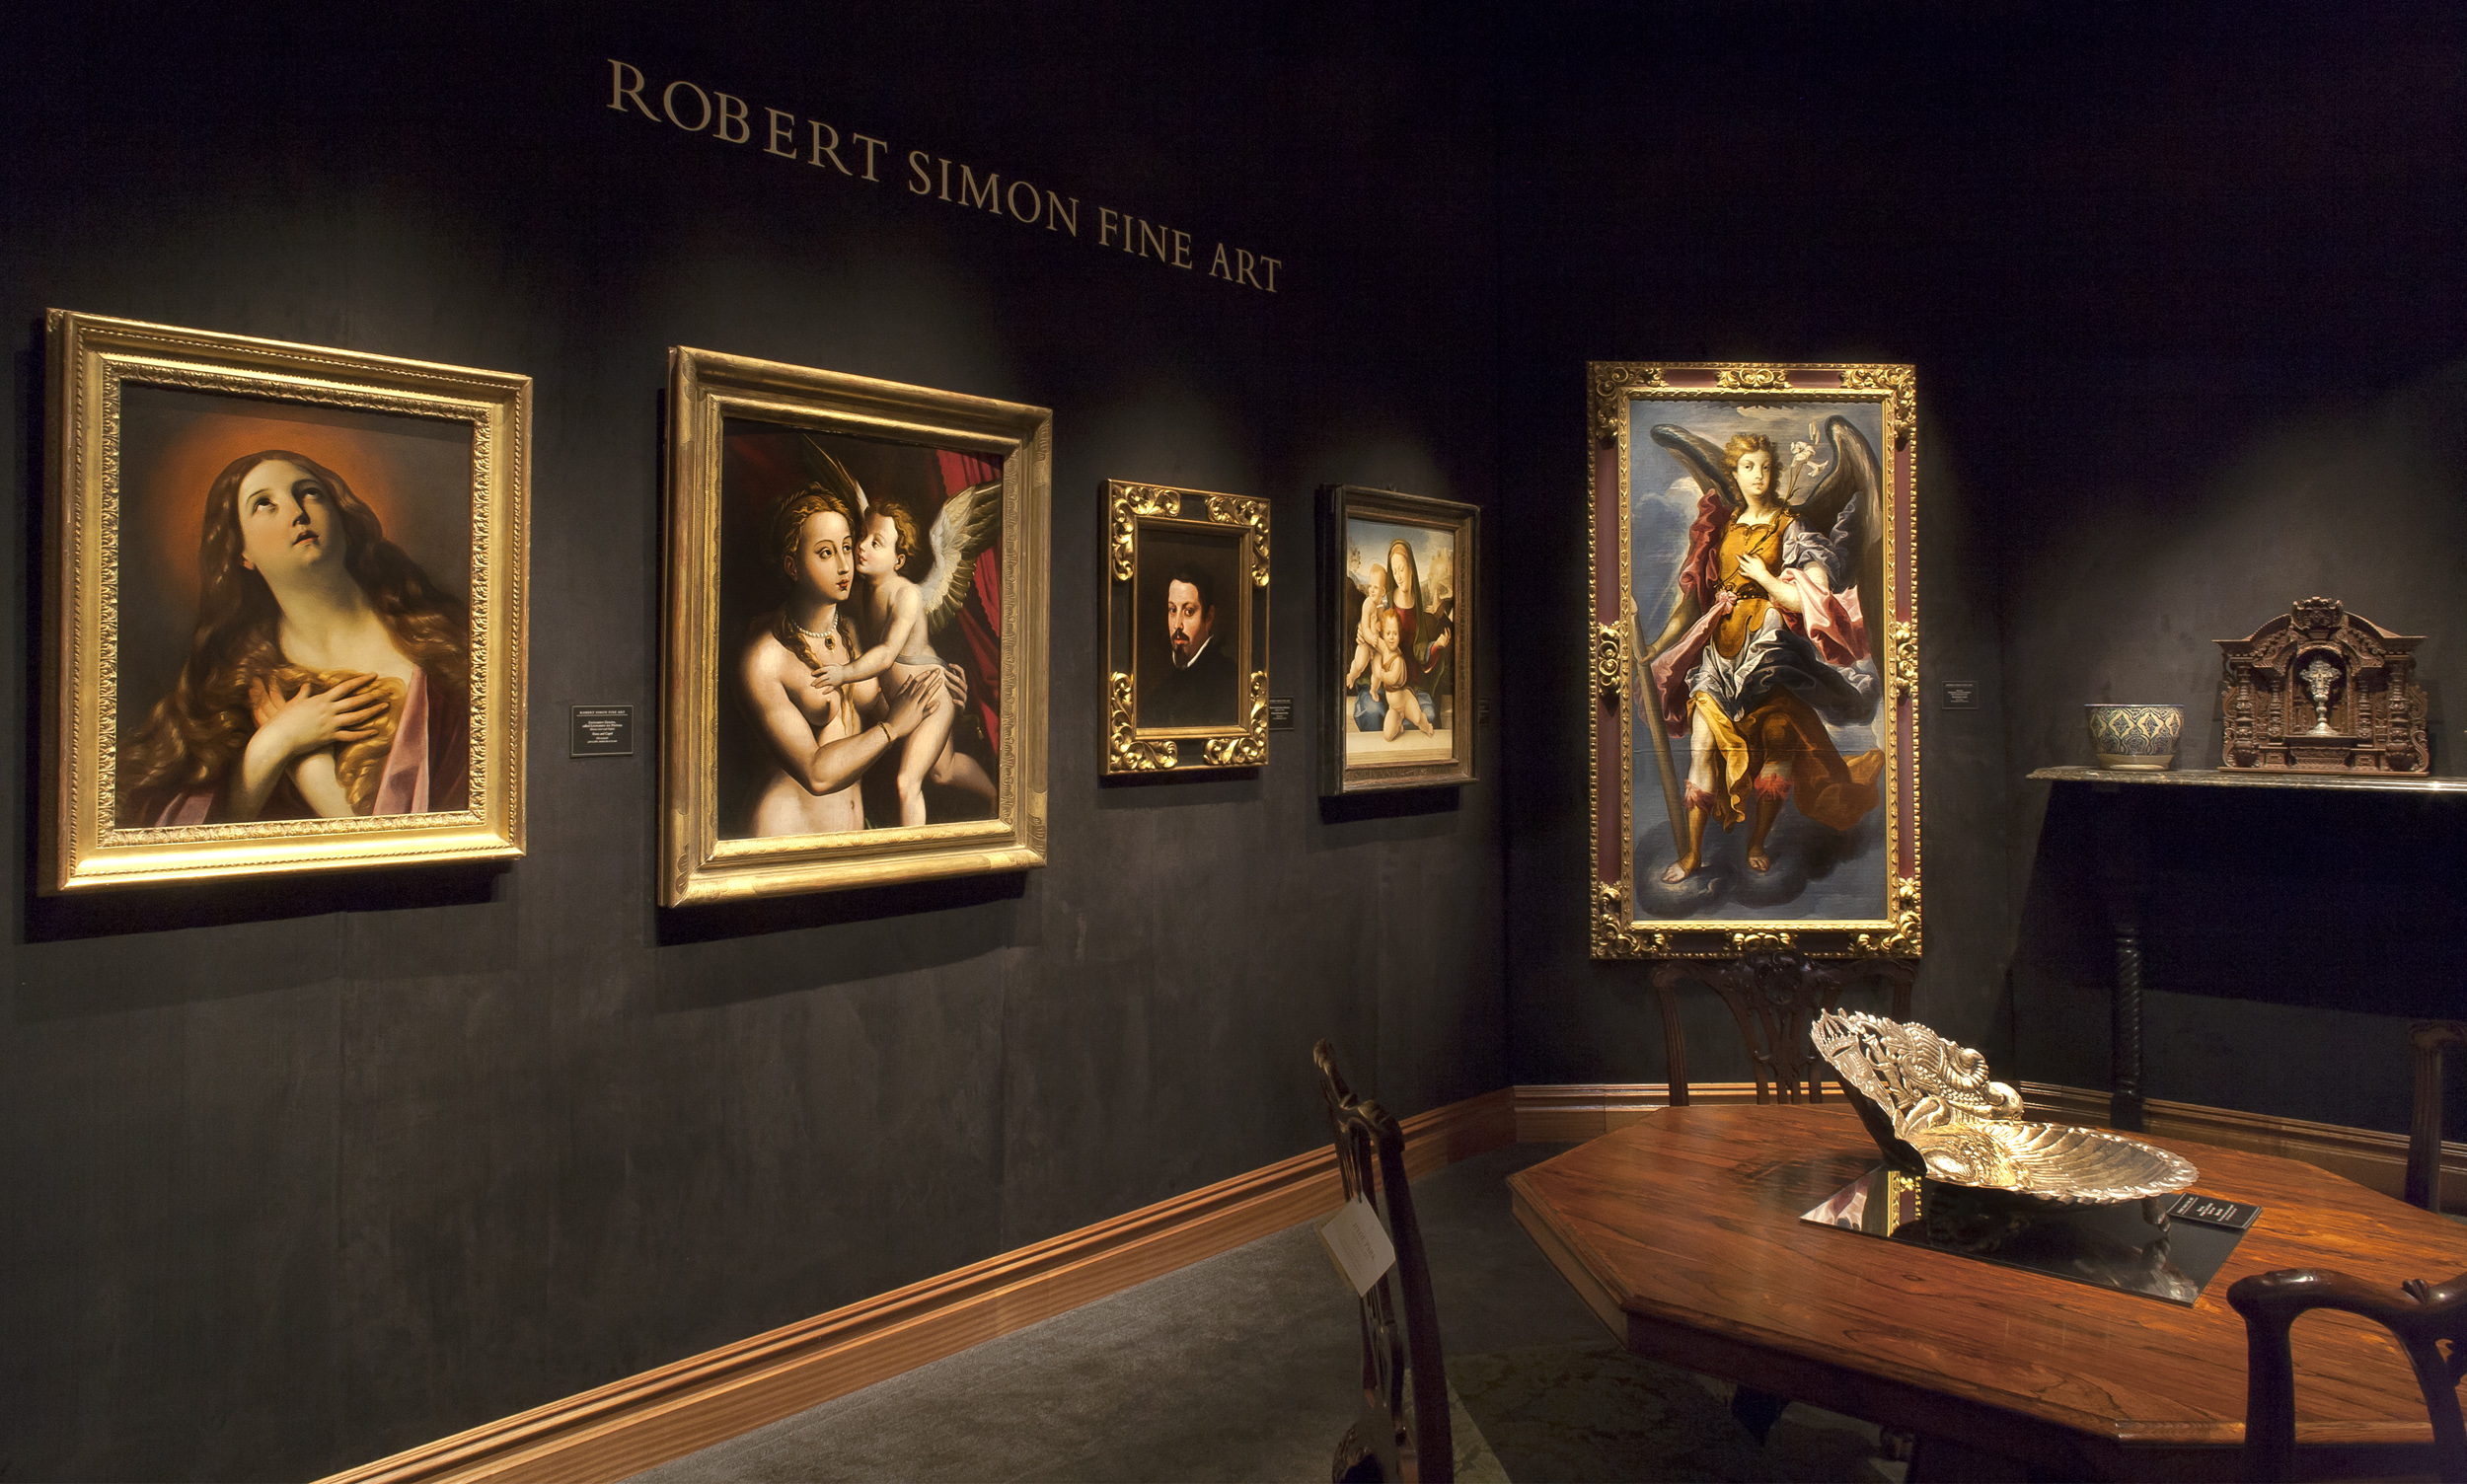 Robert Simon Fine Art Winter Show 2019 Booth C10 - View 4